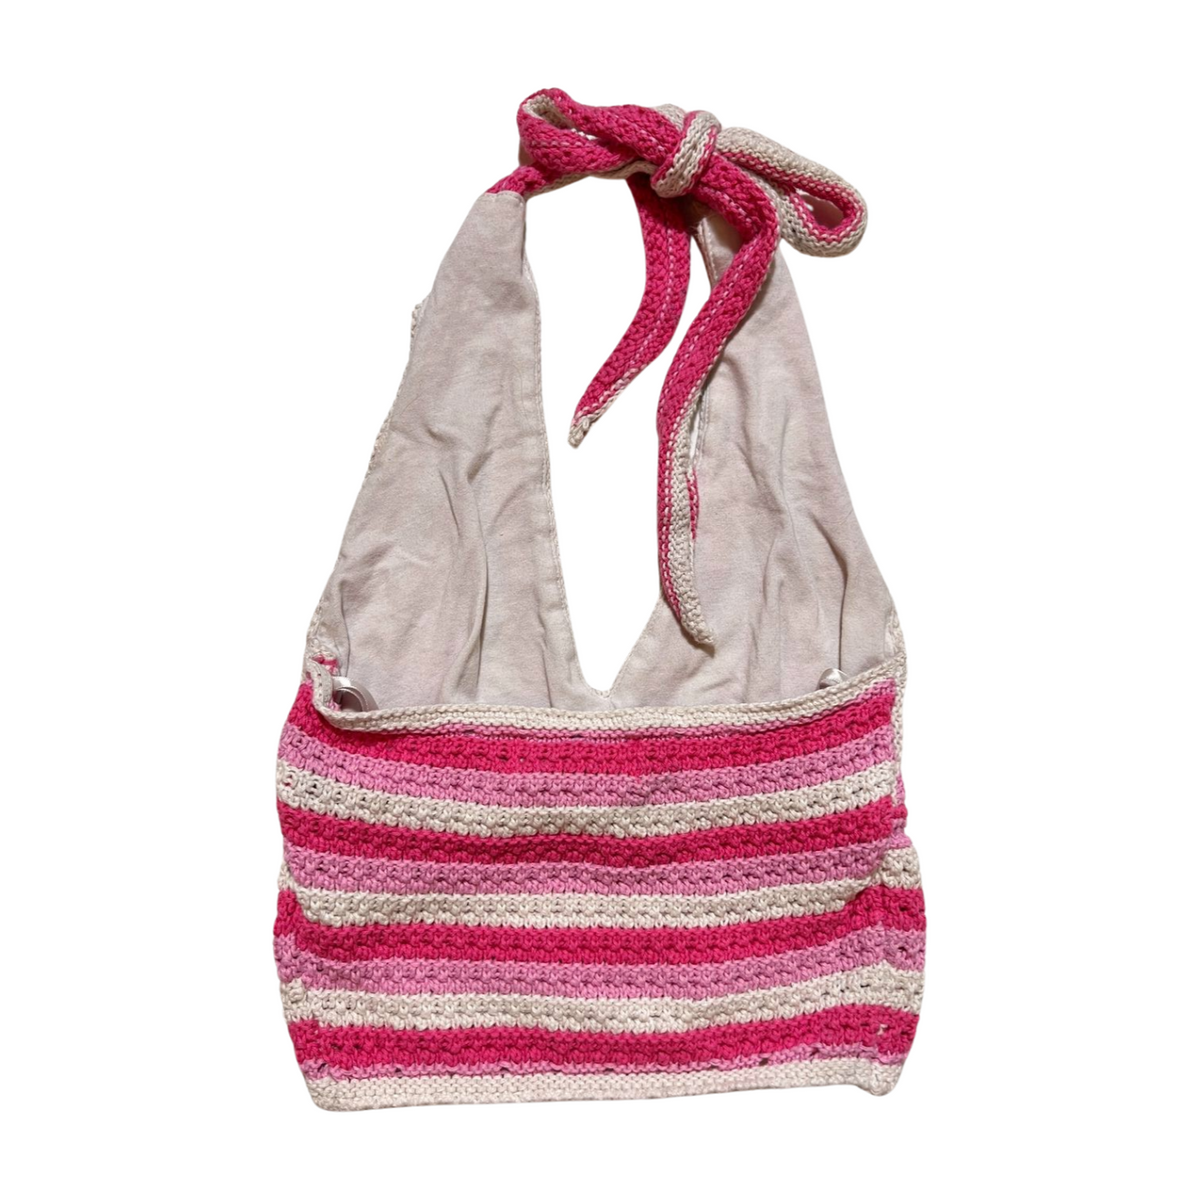 Hollister- Pink Crochet Halter Top